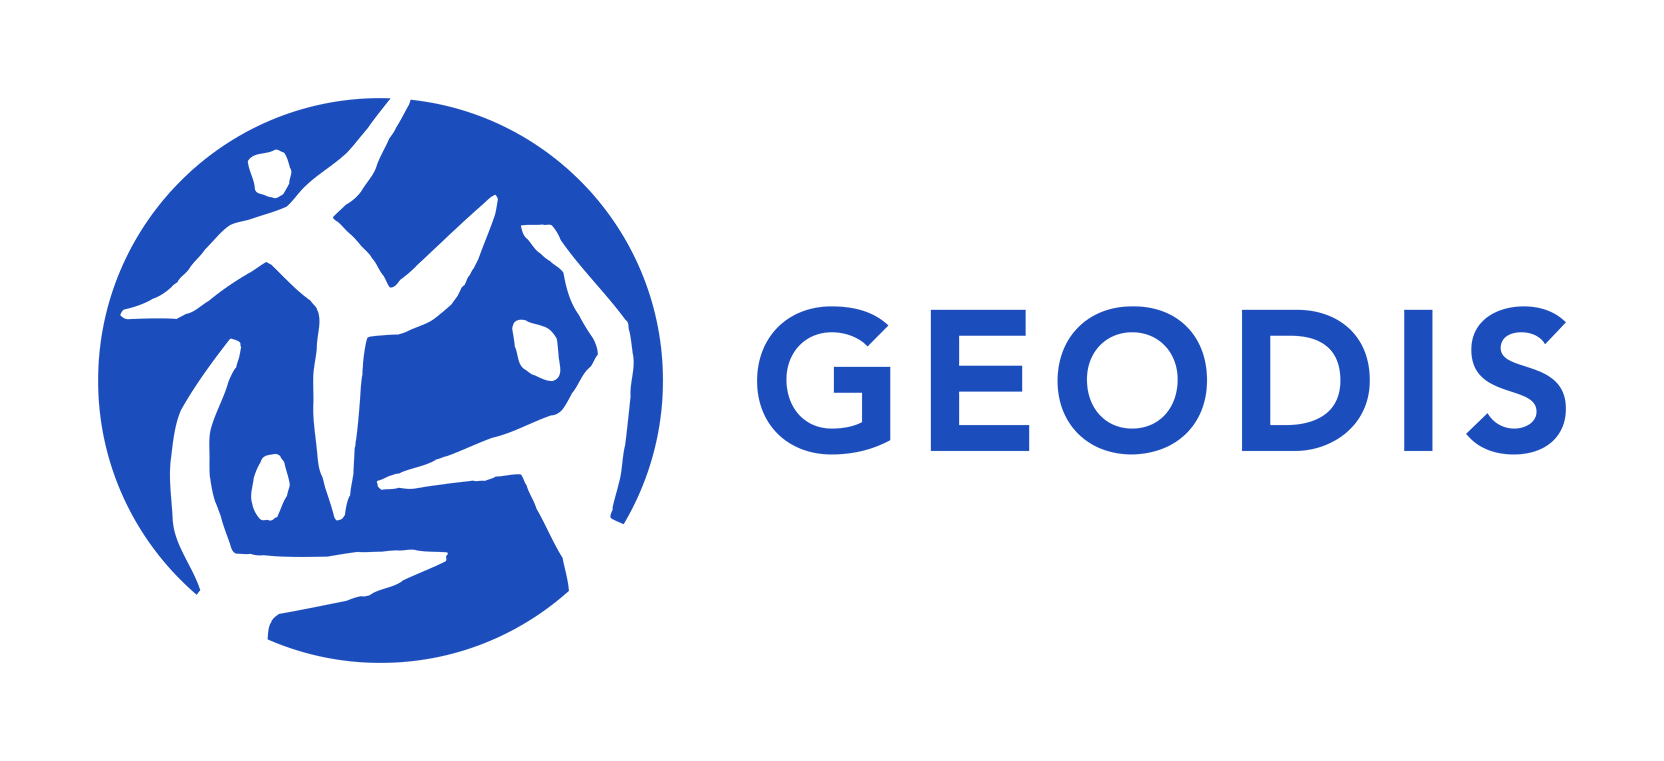 Logo Geodis